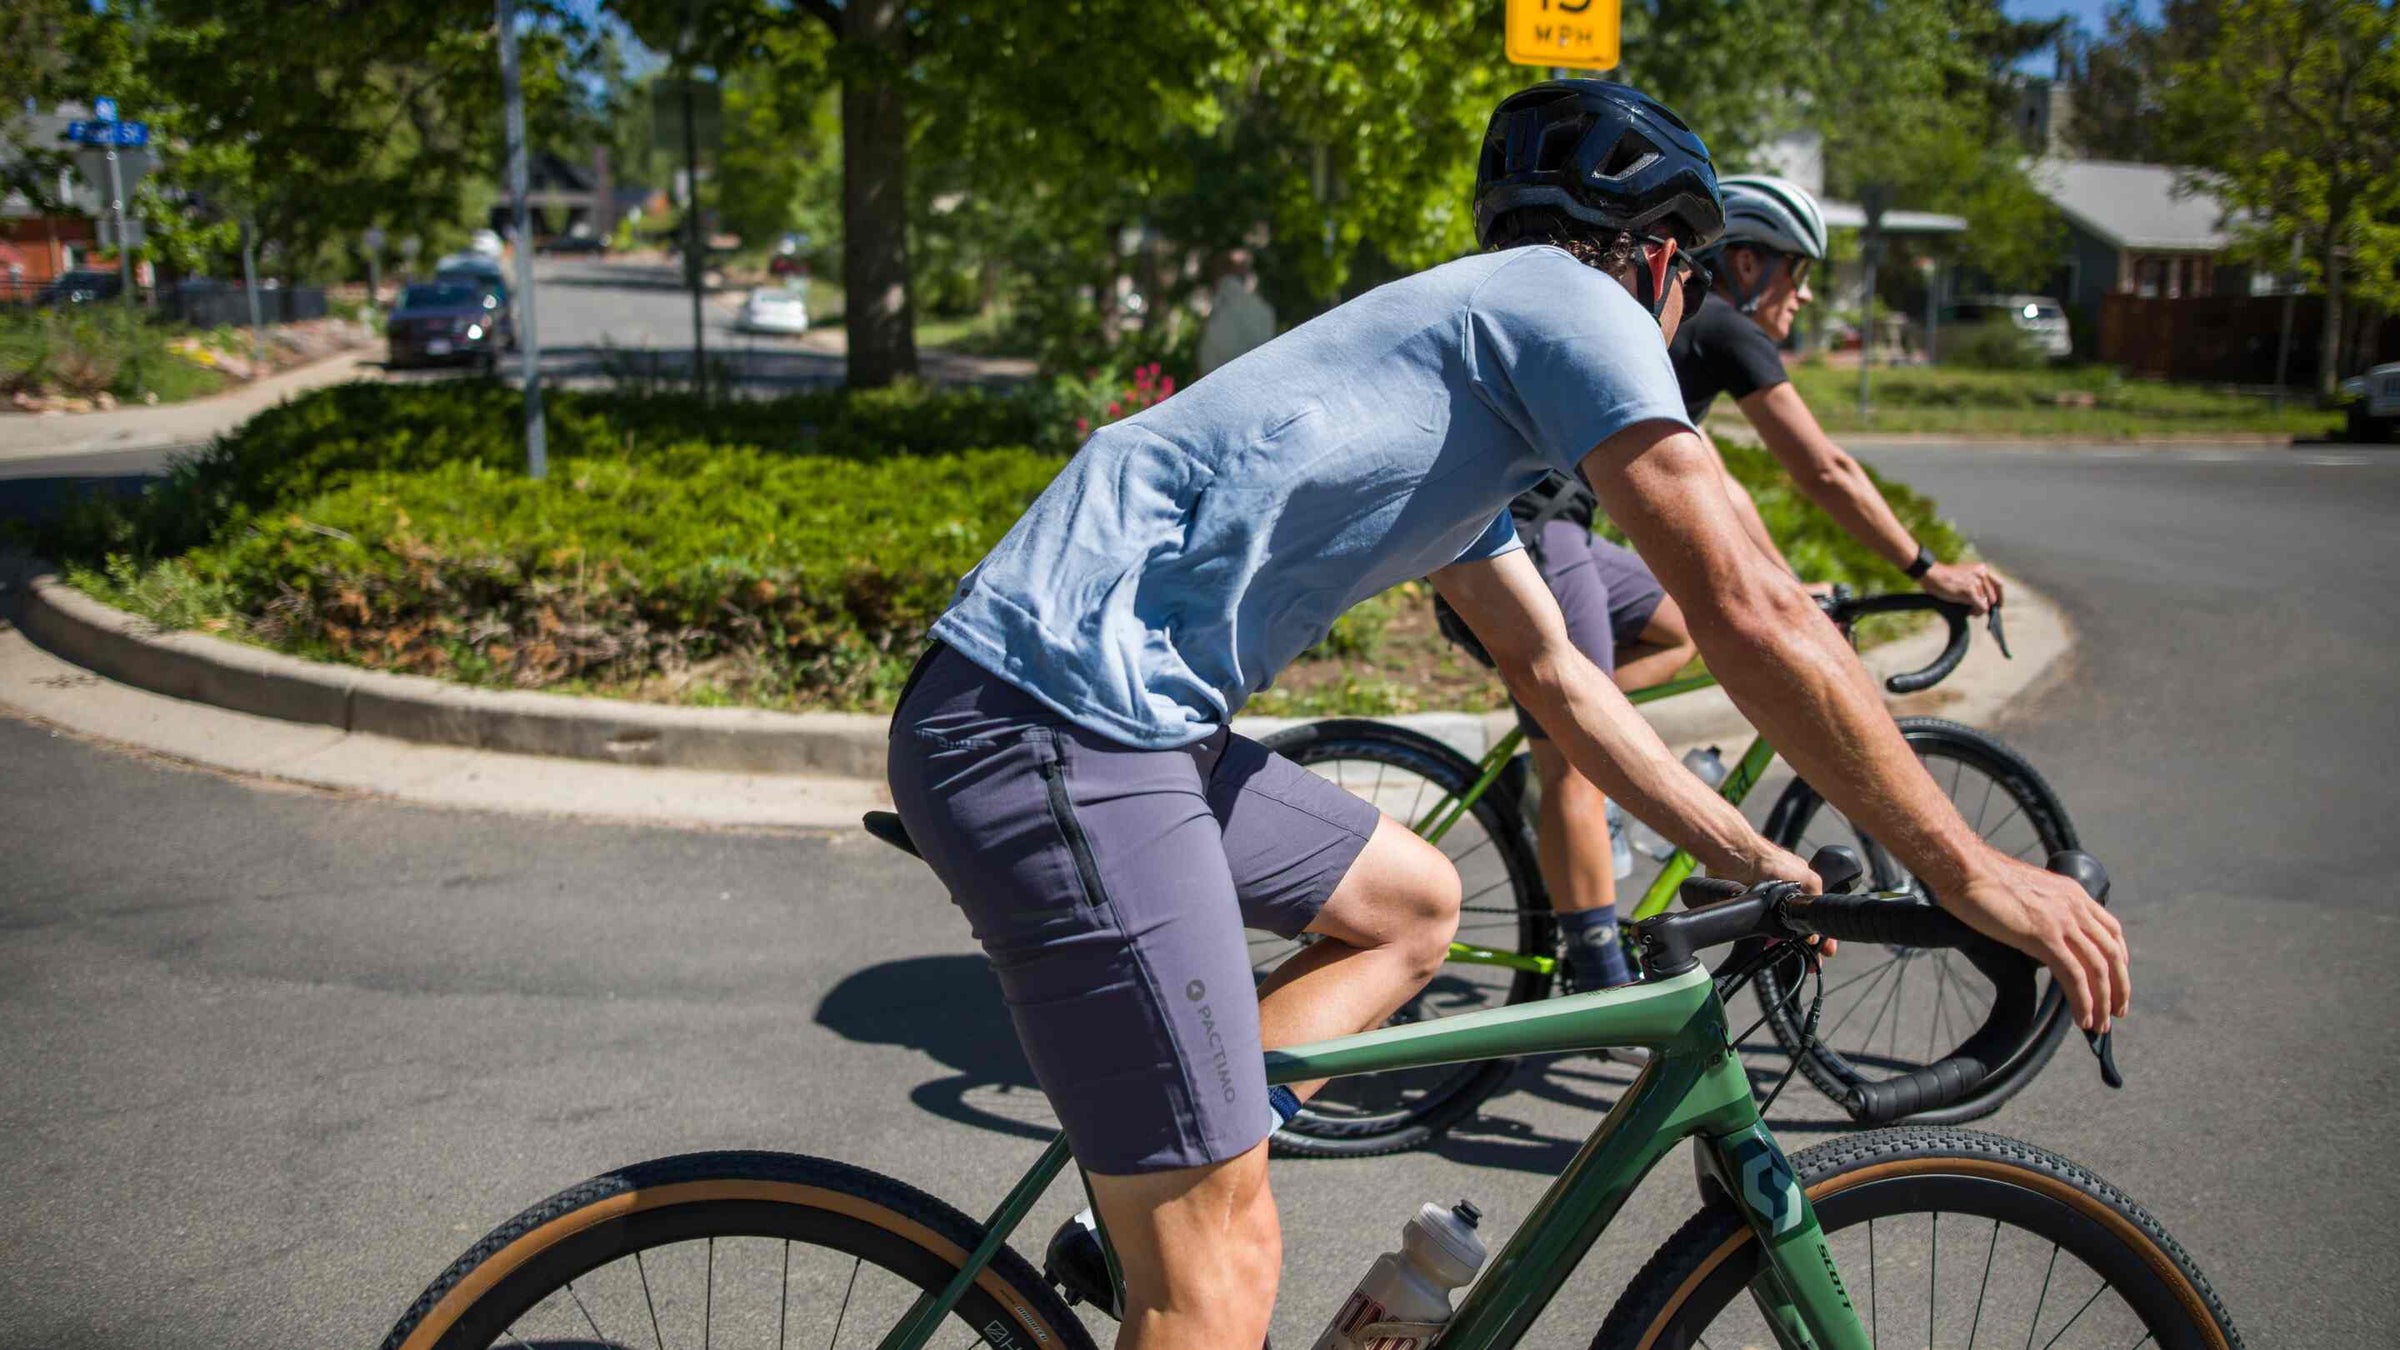 Pactimo Commuter Bike Clothing for Men